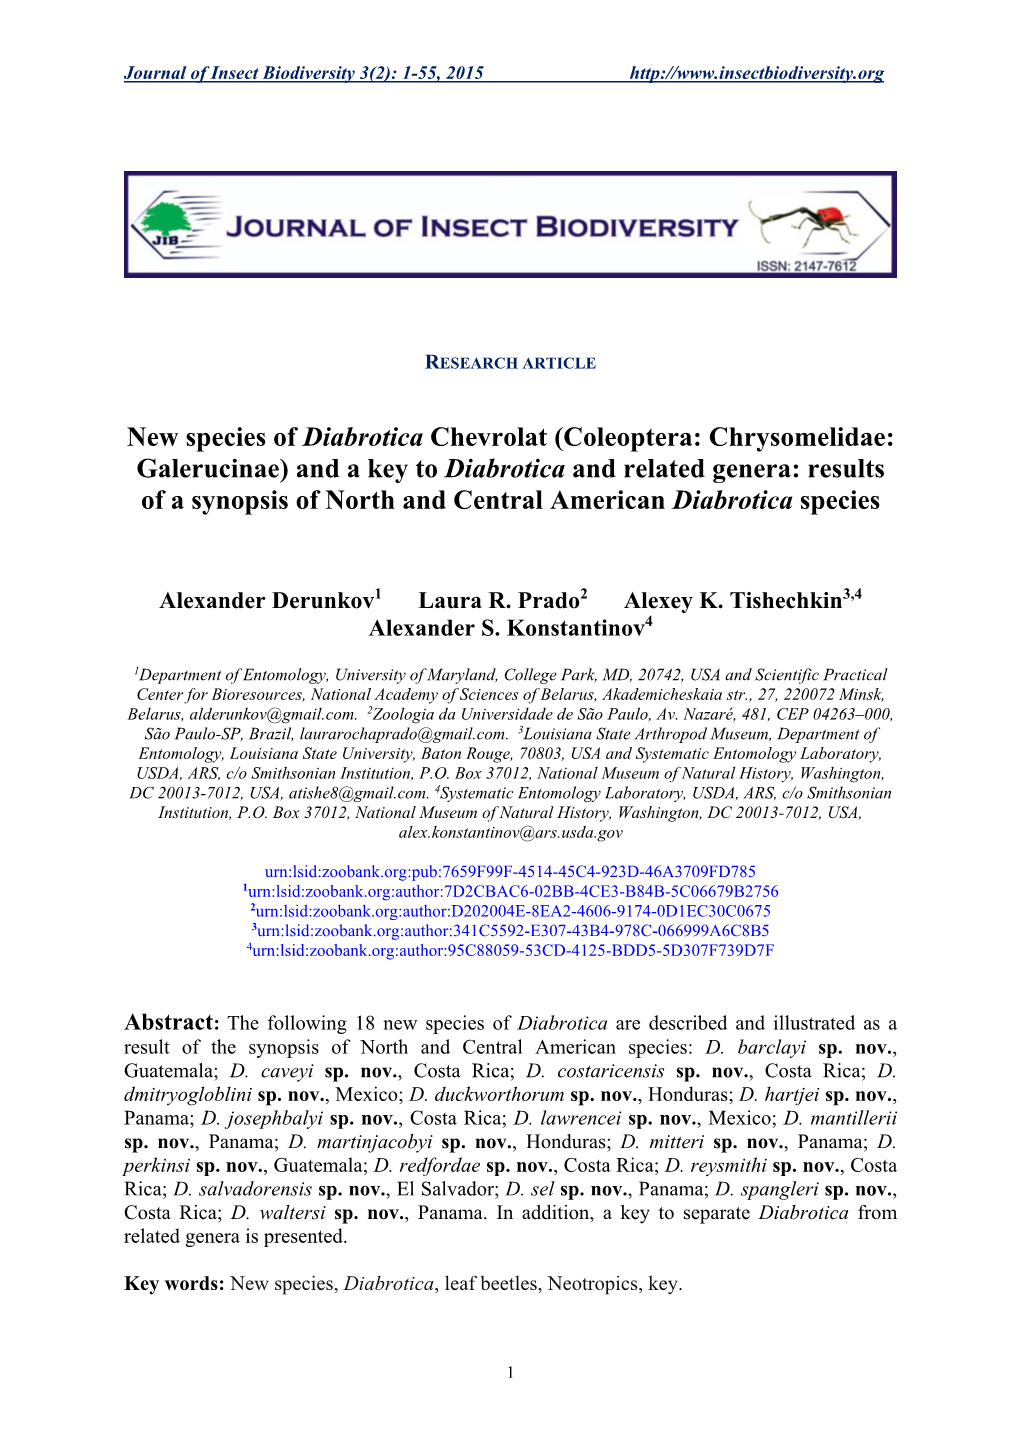 New Species of Diabrotica Chevrolat (Coleoptera: Chrysomelidae